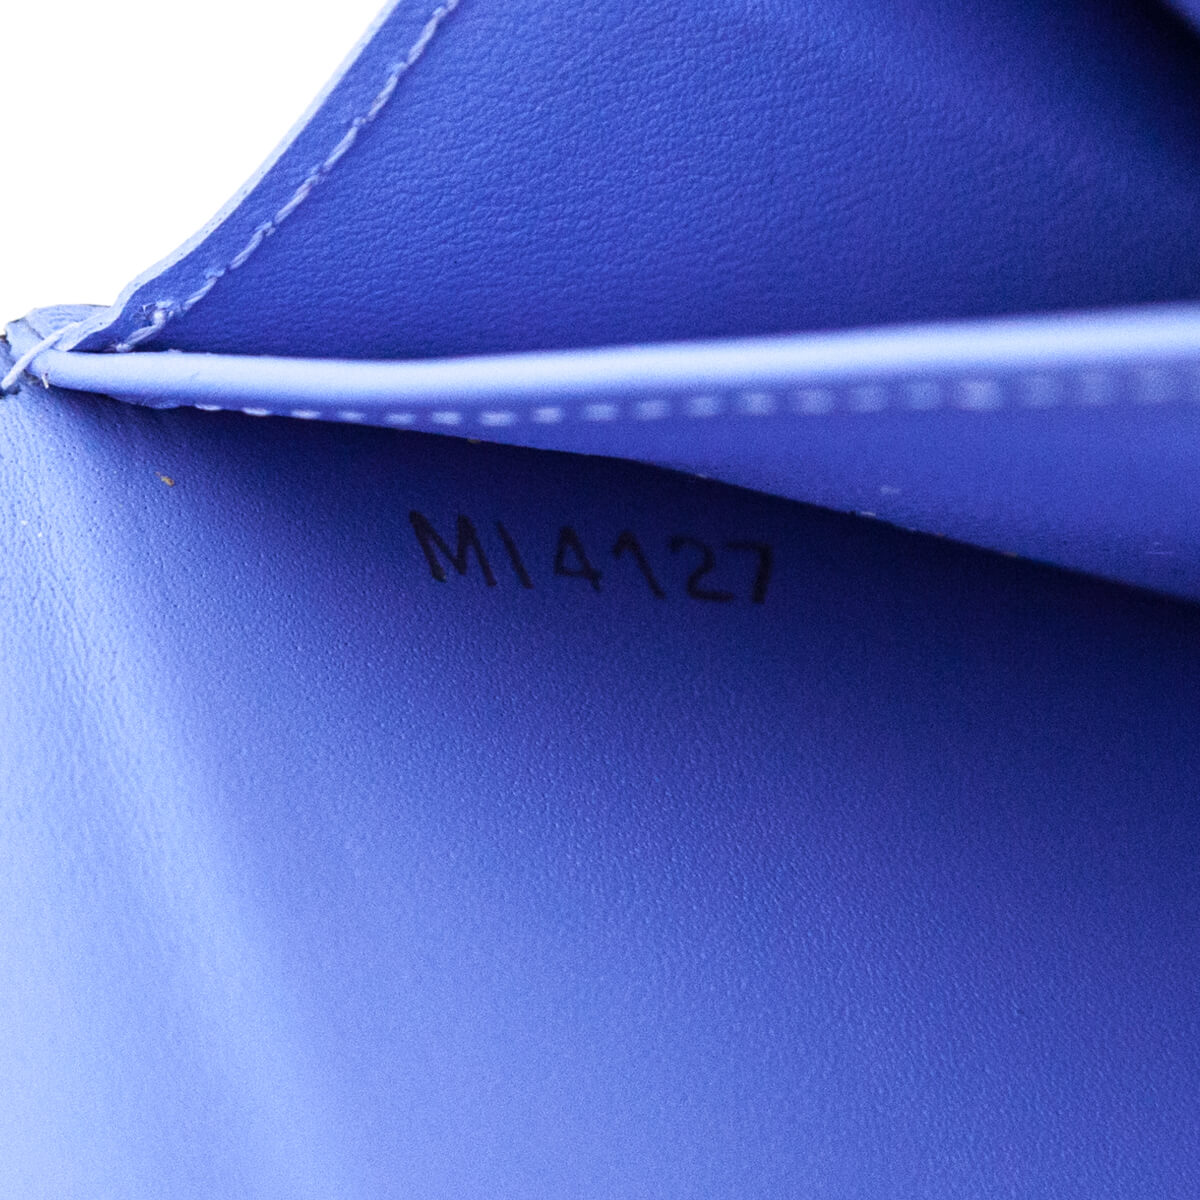 Louis Vuitton x Jeff Koons Masters Monet Zippy Wallet. Tradesy